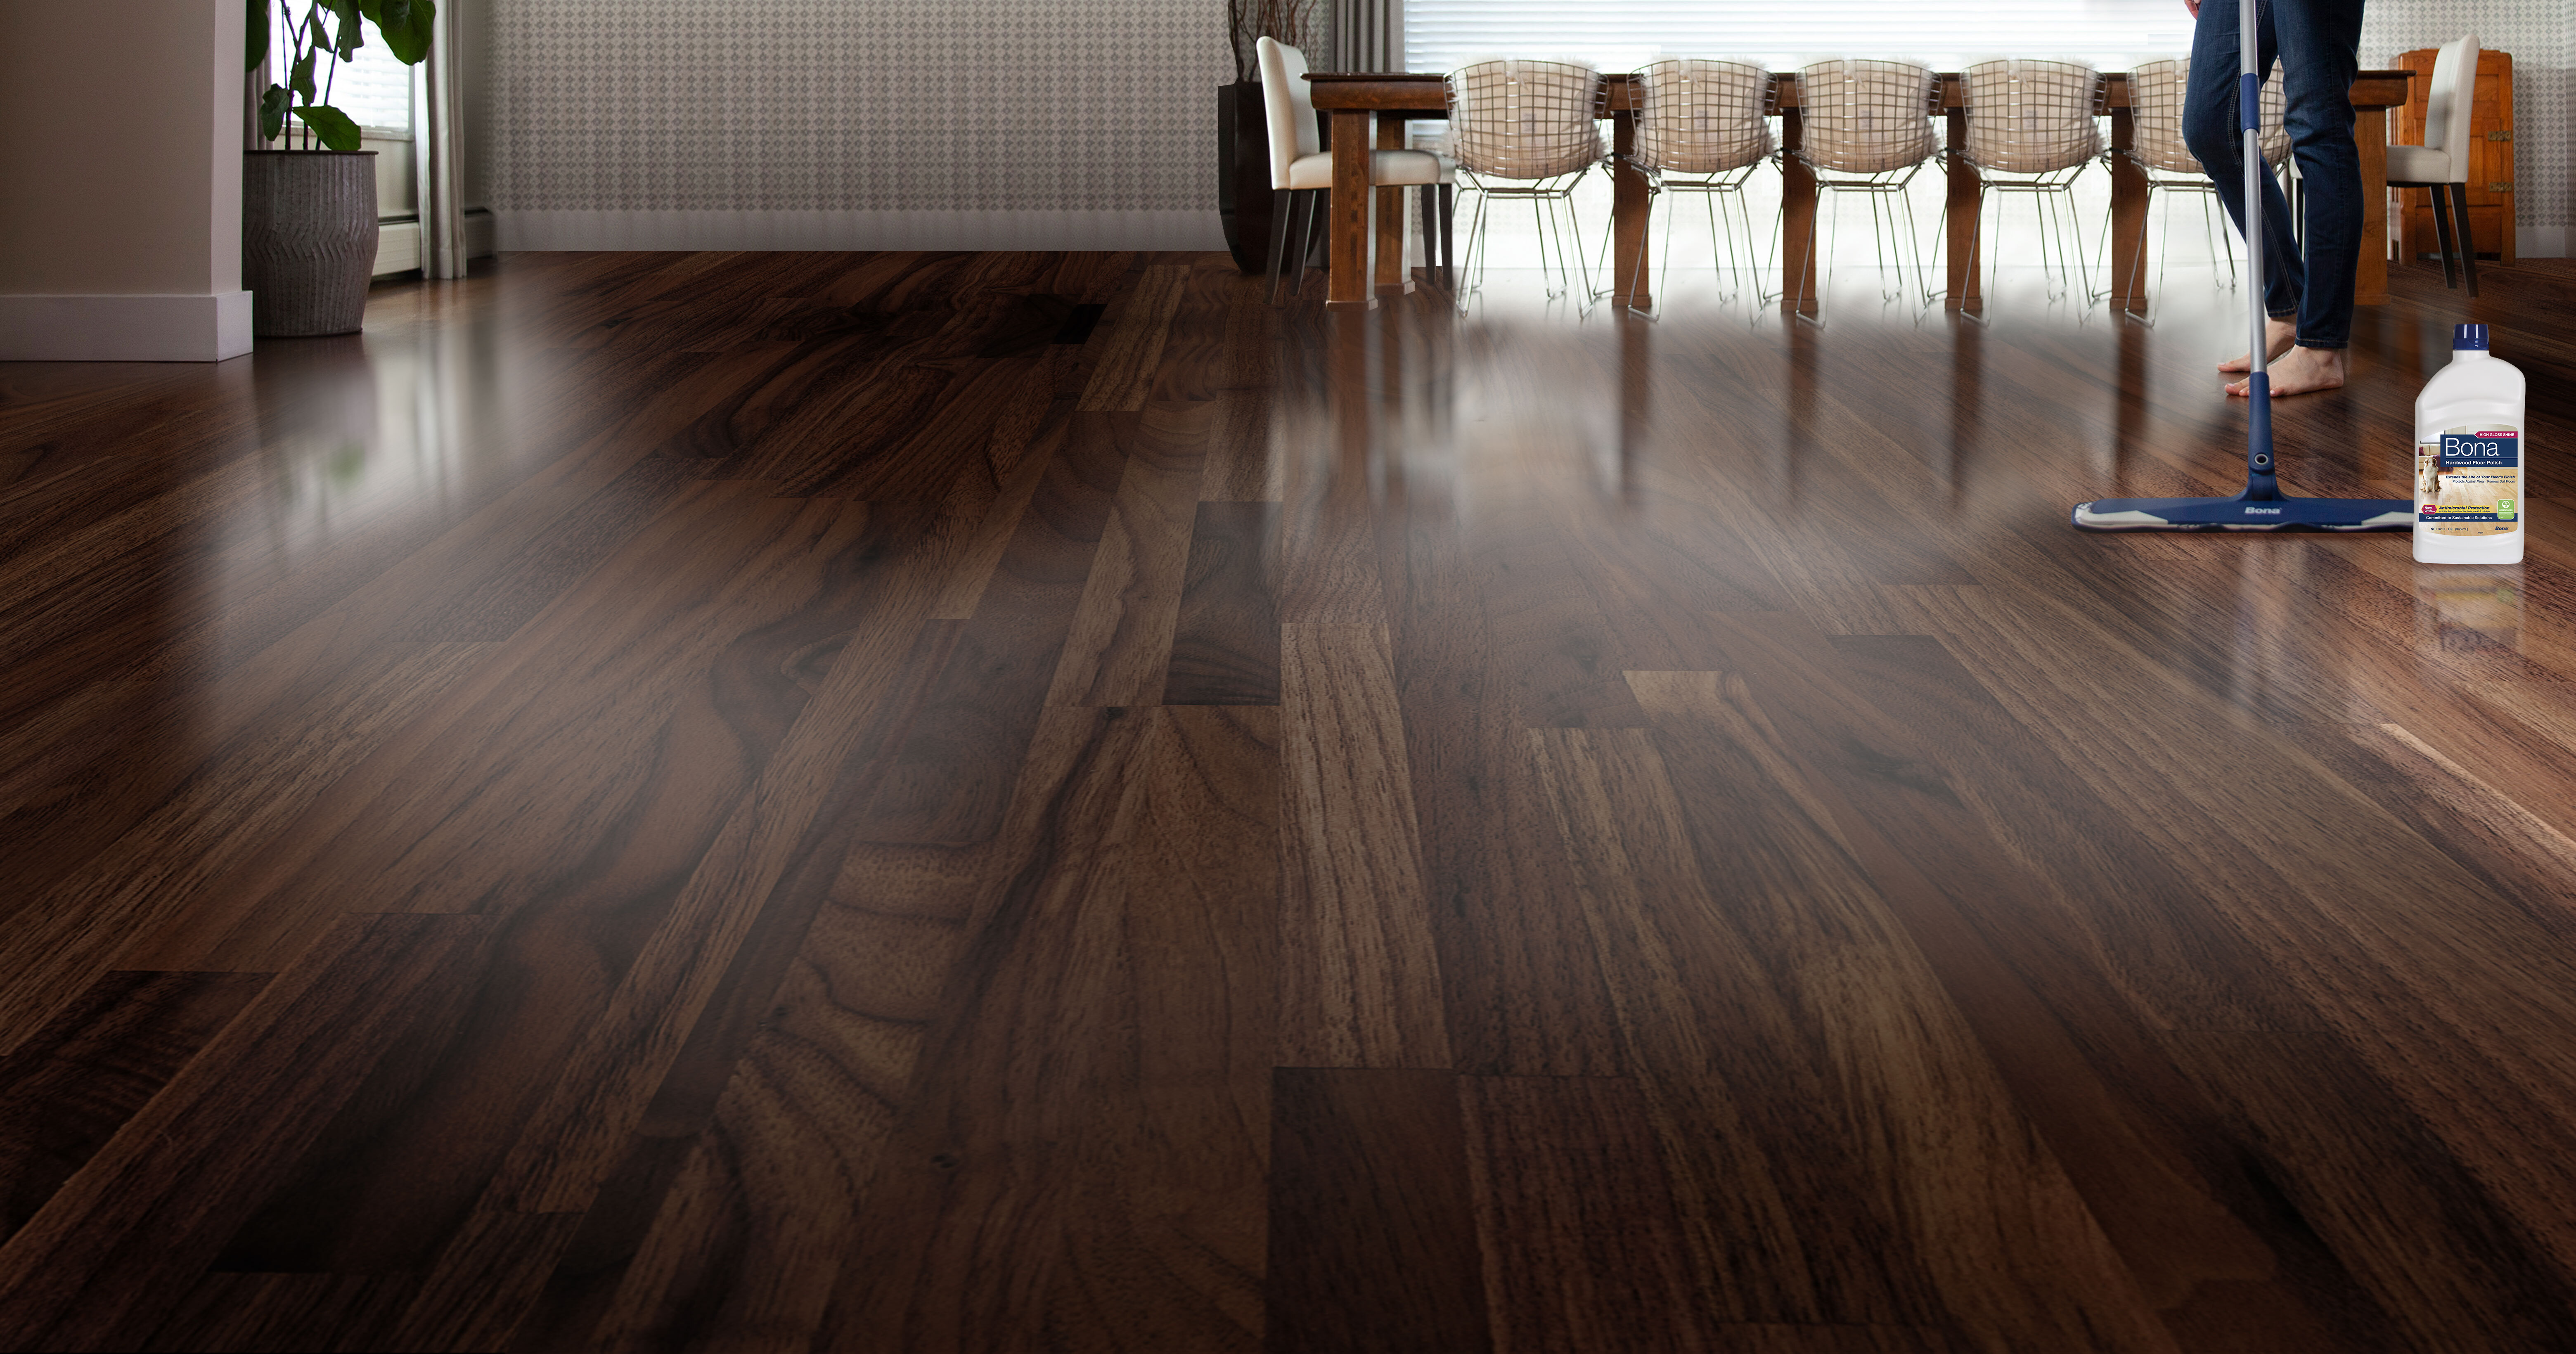 How To Polish Hardwood Floors Do S And, How Do You Clean And Polish Hardwood Floors